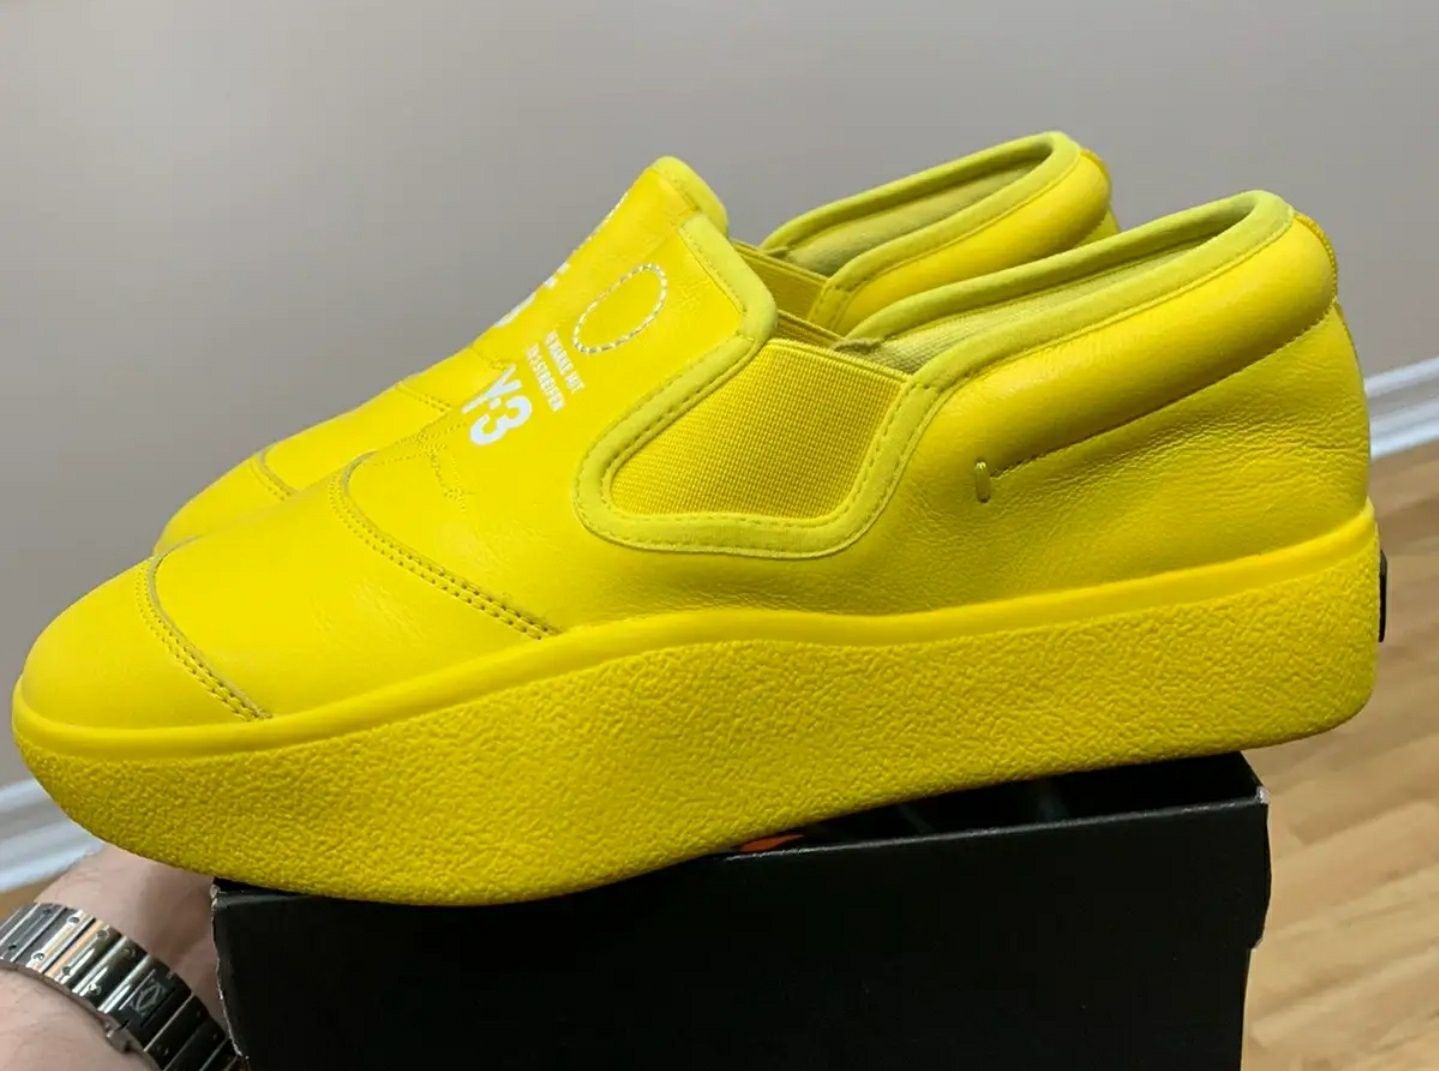 Y-3 Tangutsu yellow ( piele ) 39 1/2

850 lei